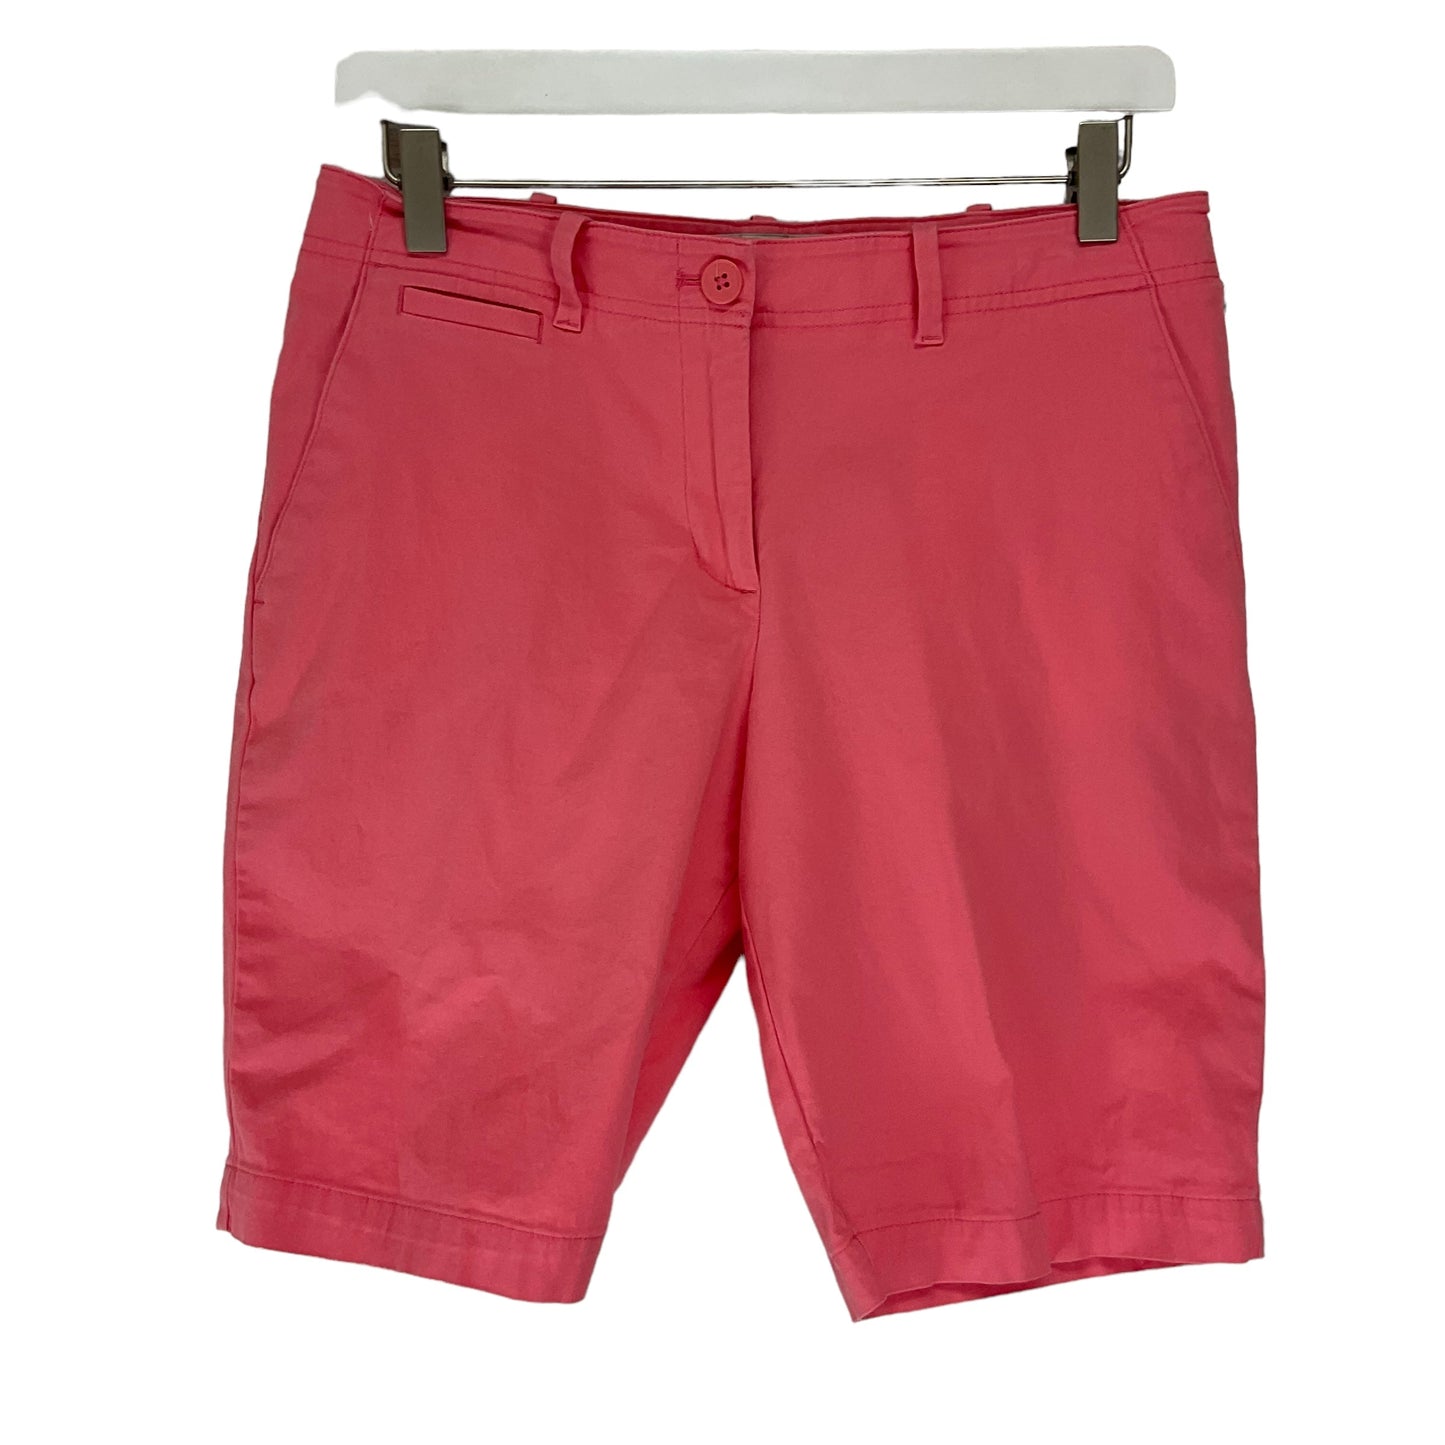 Pink Shorts Talbots, Size 6